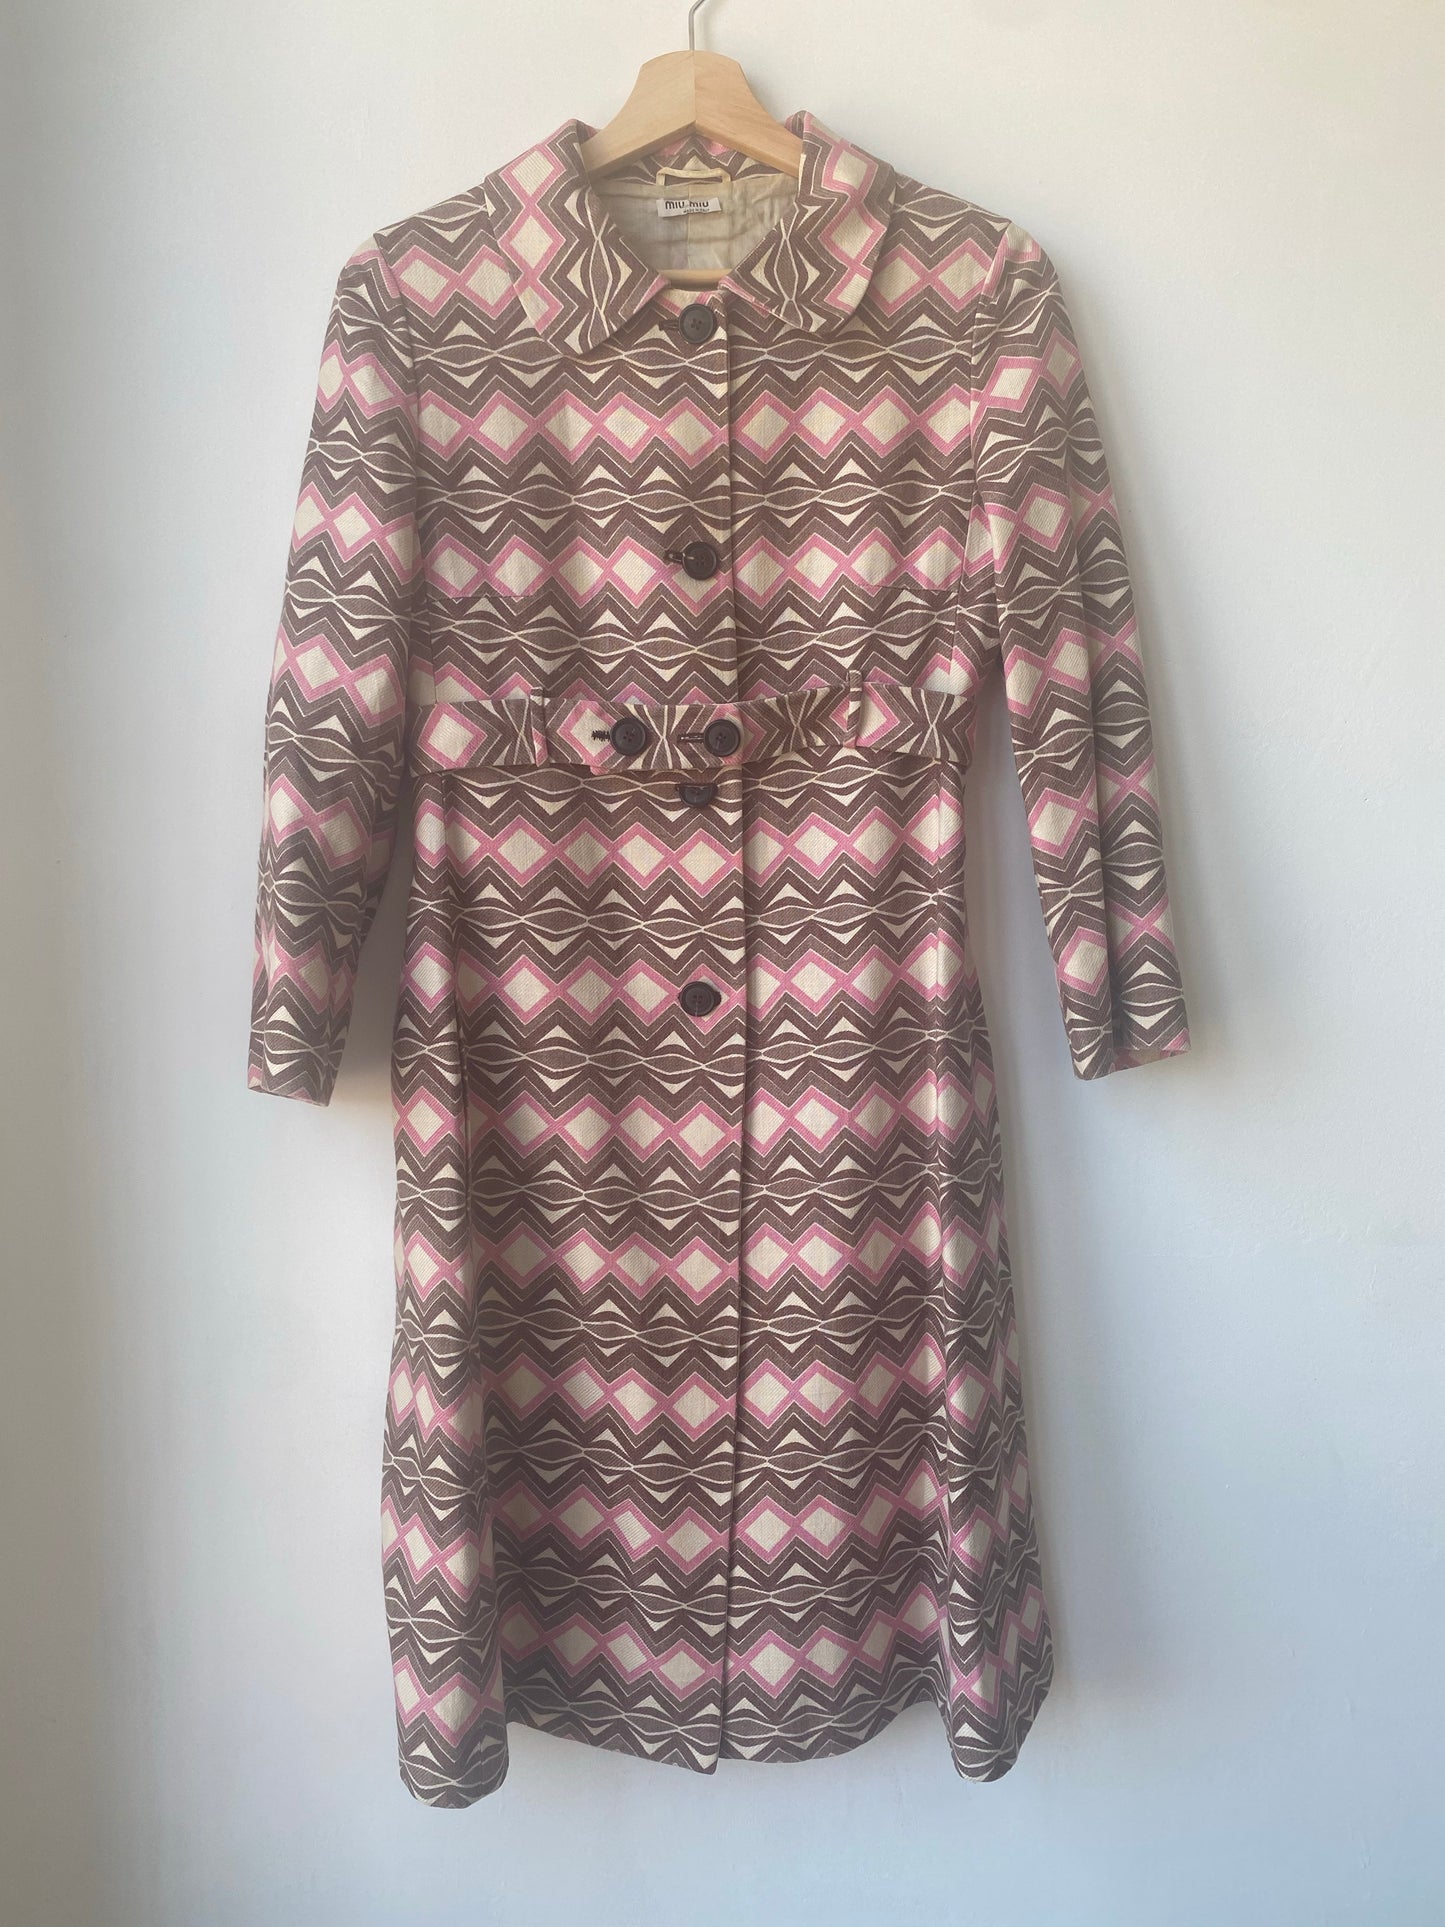 Vintage Miu Miu lightweight printed dress coat.